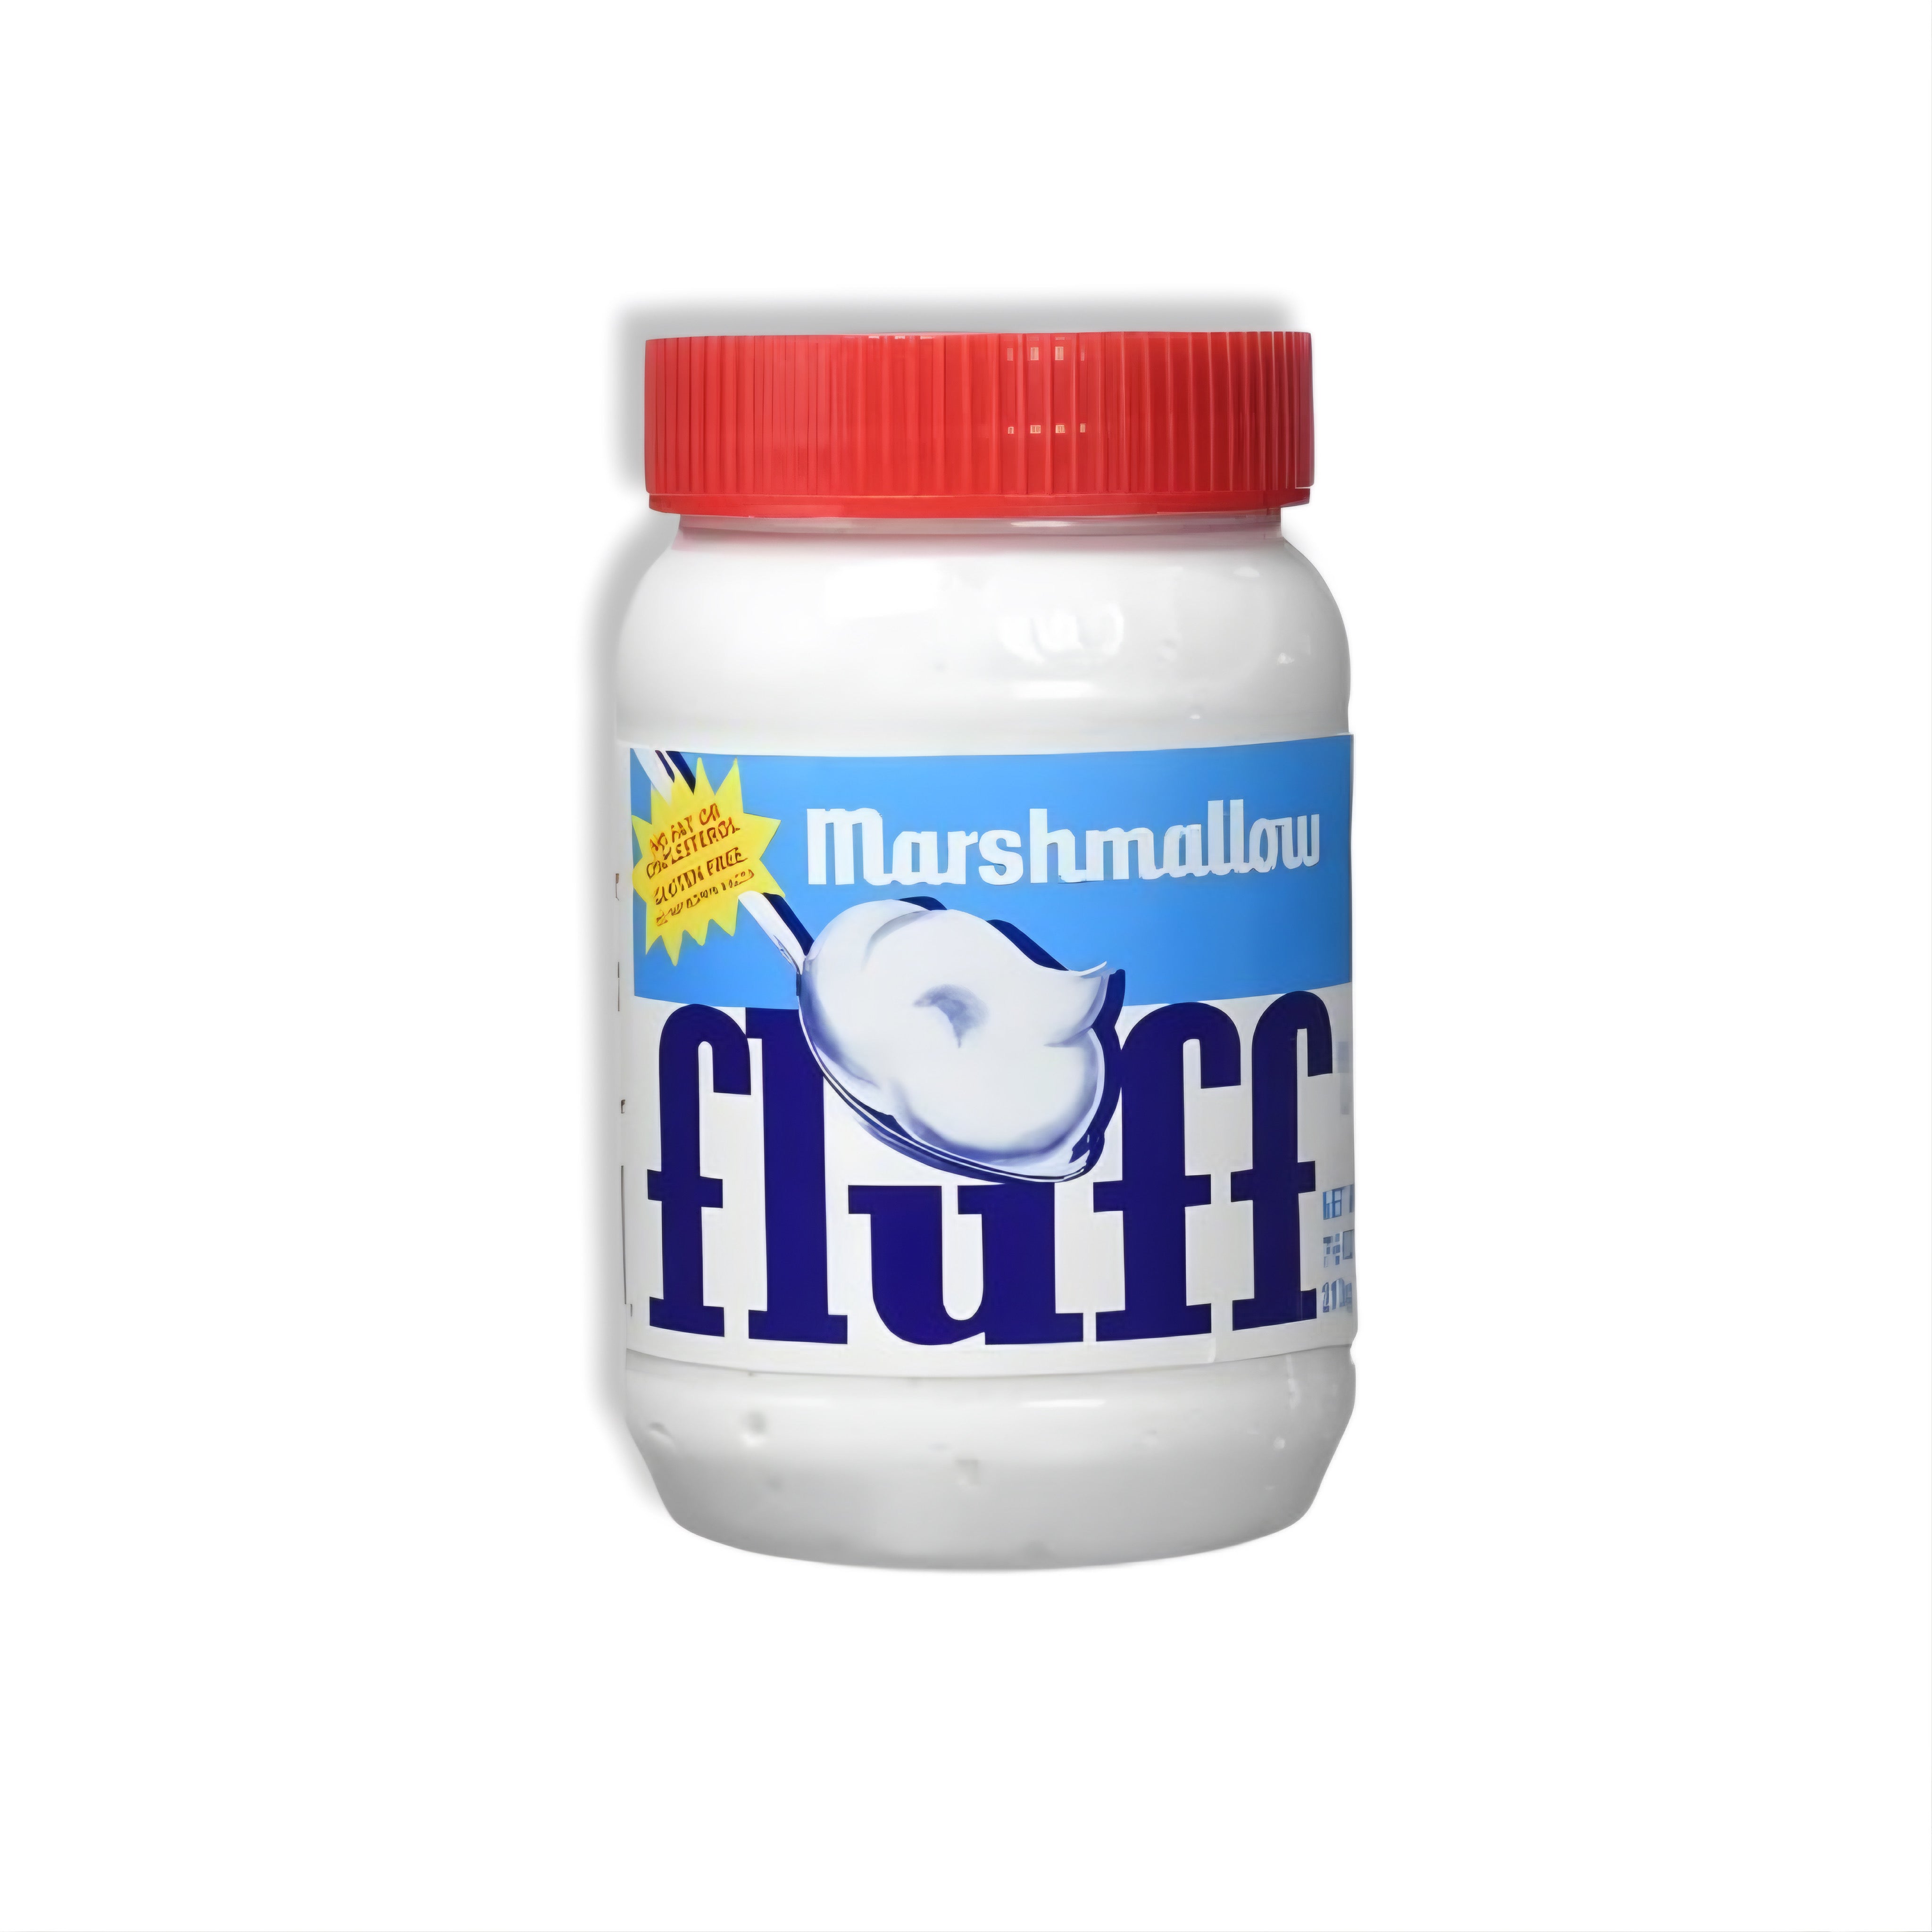 Fluff - Marshmallow